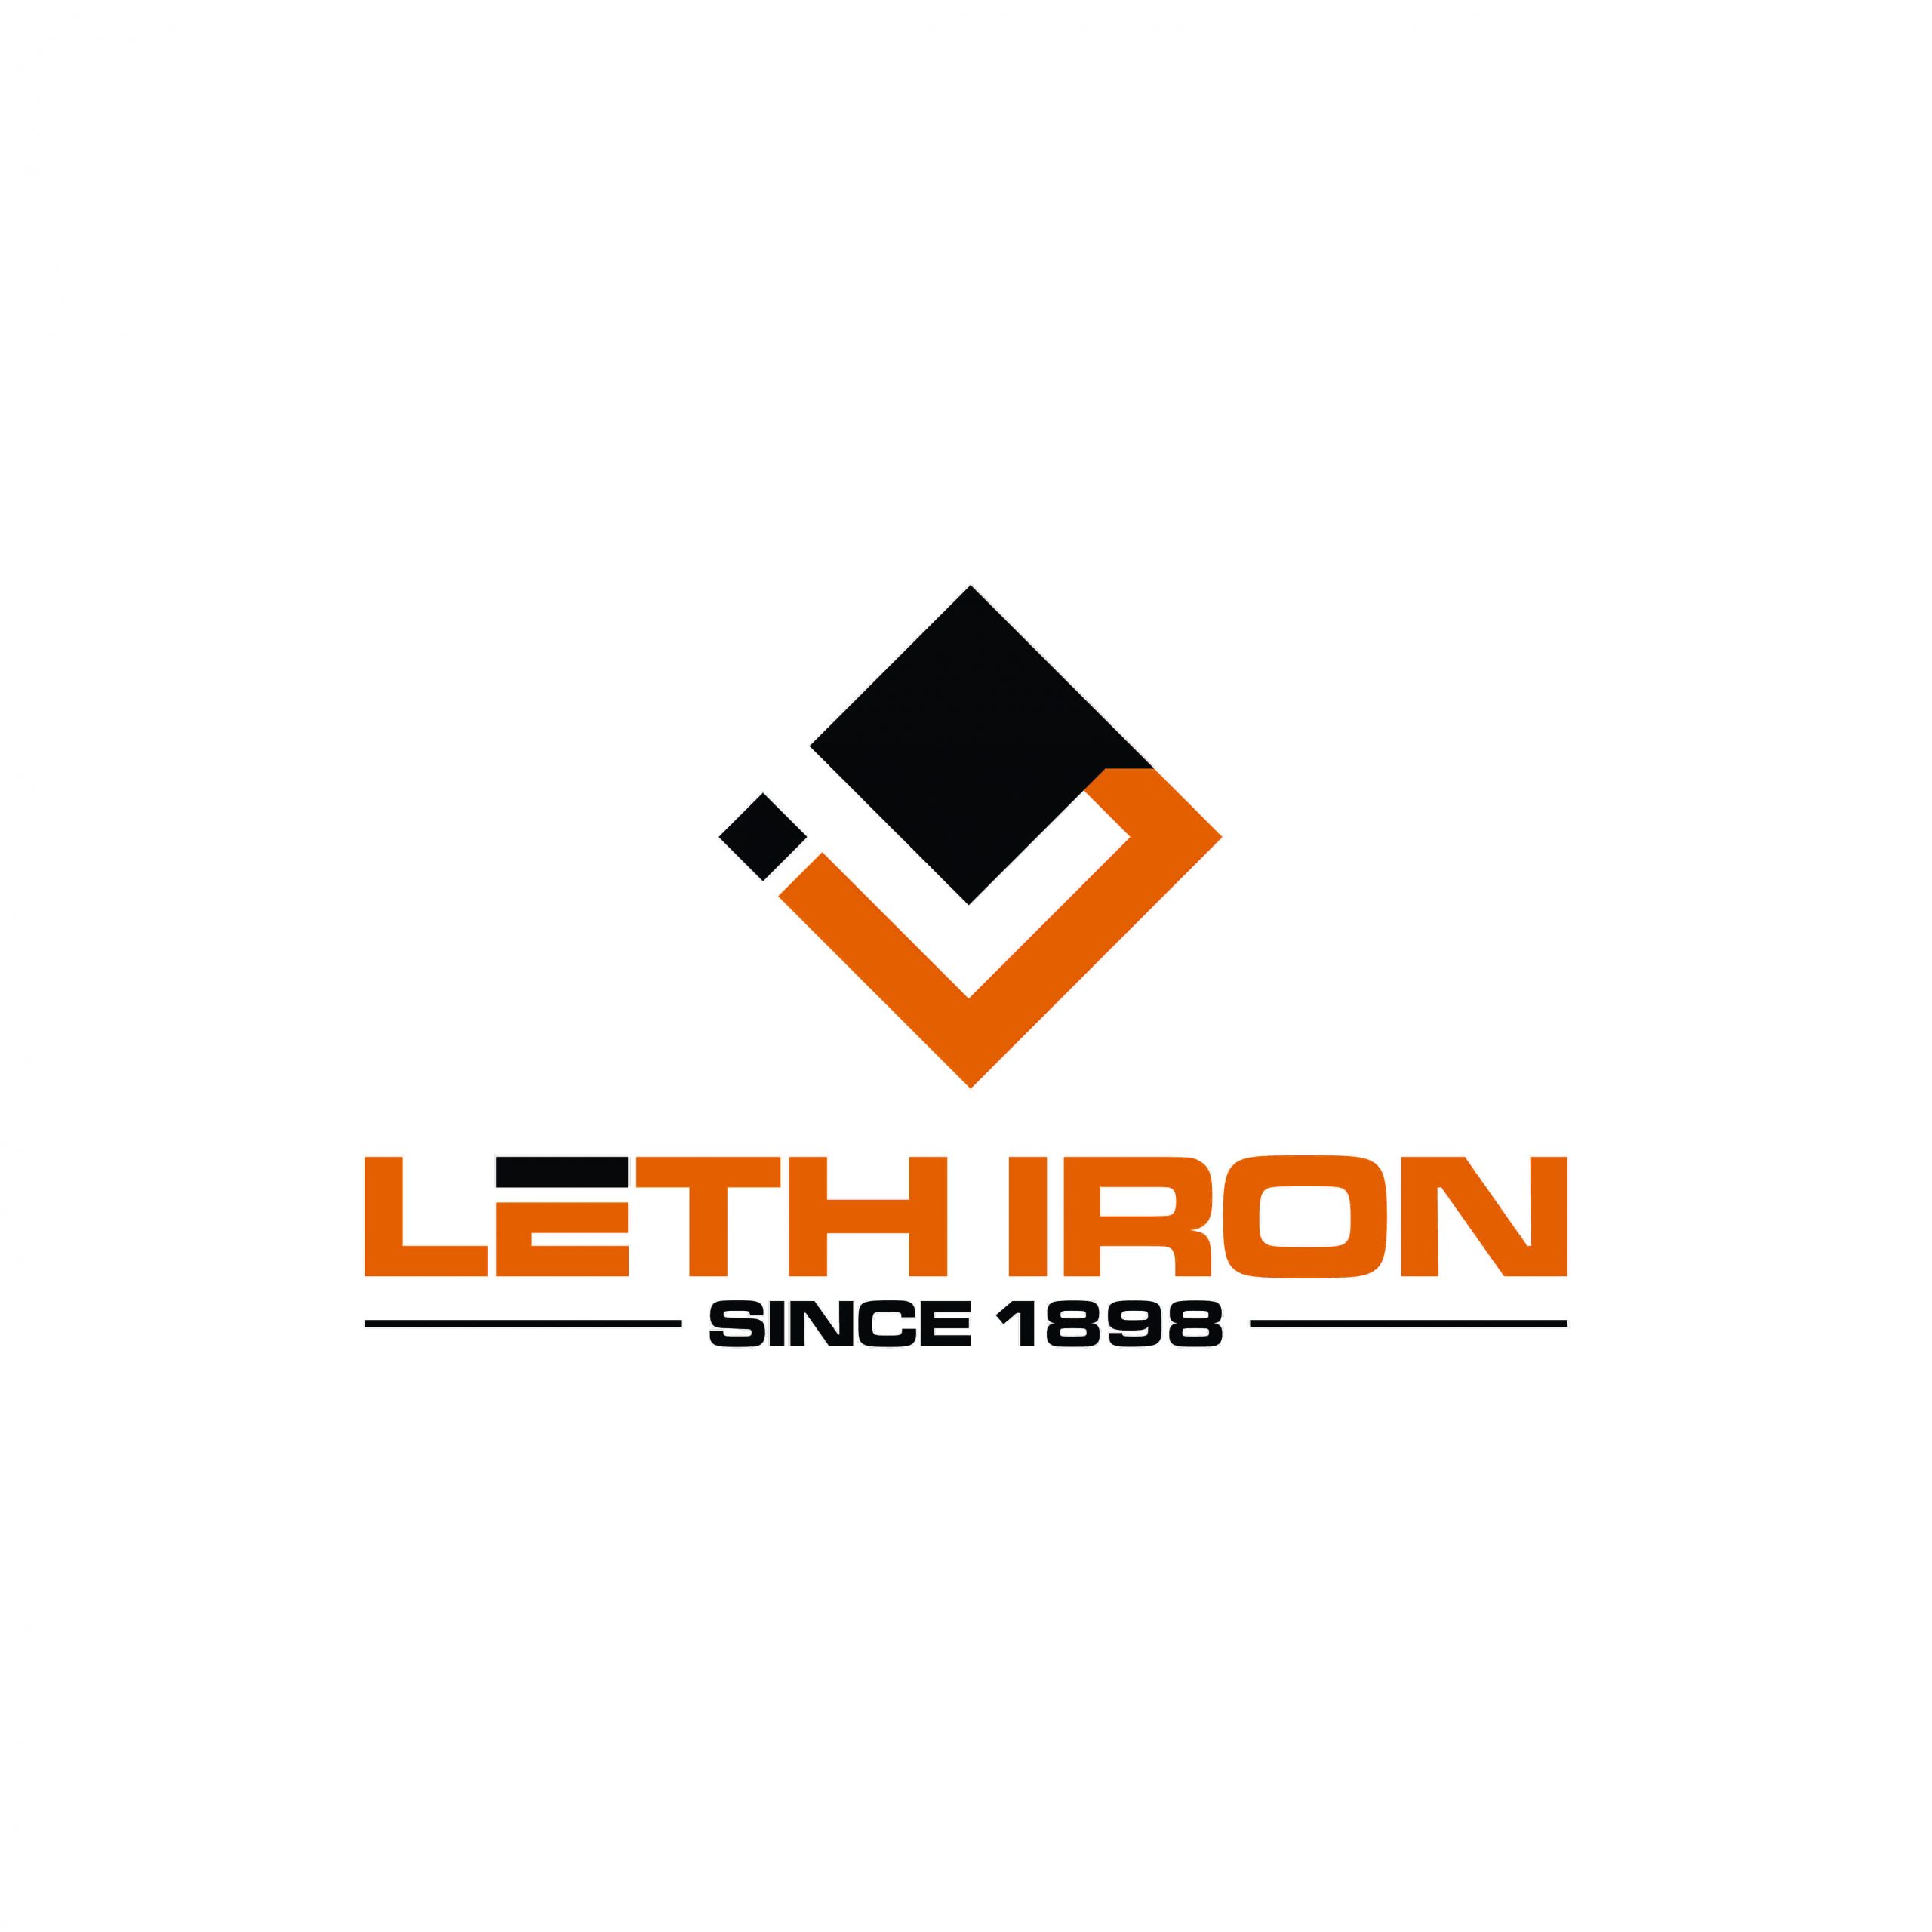 lethbridge iron works logo